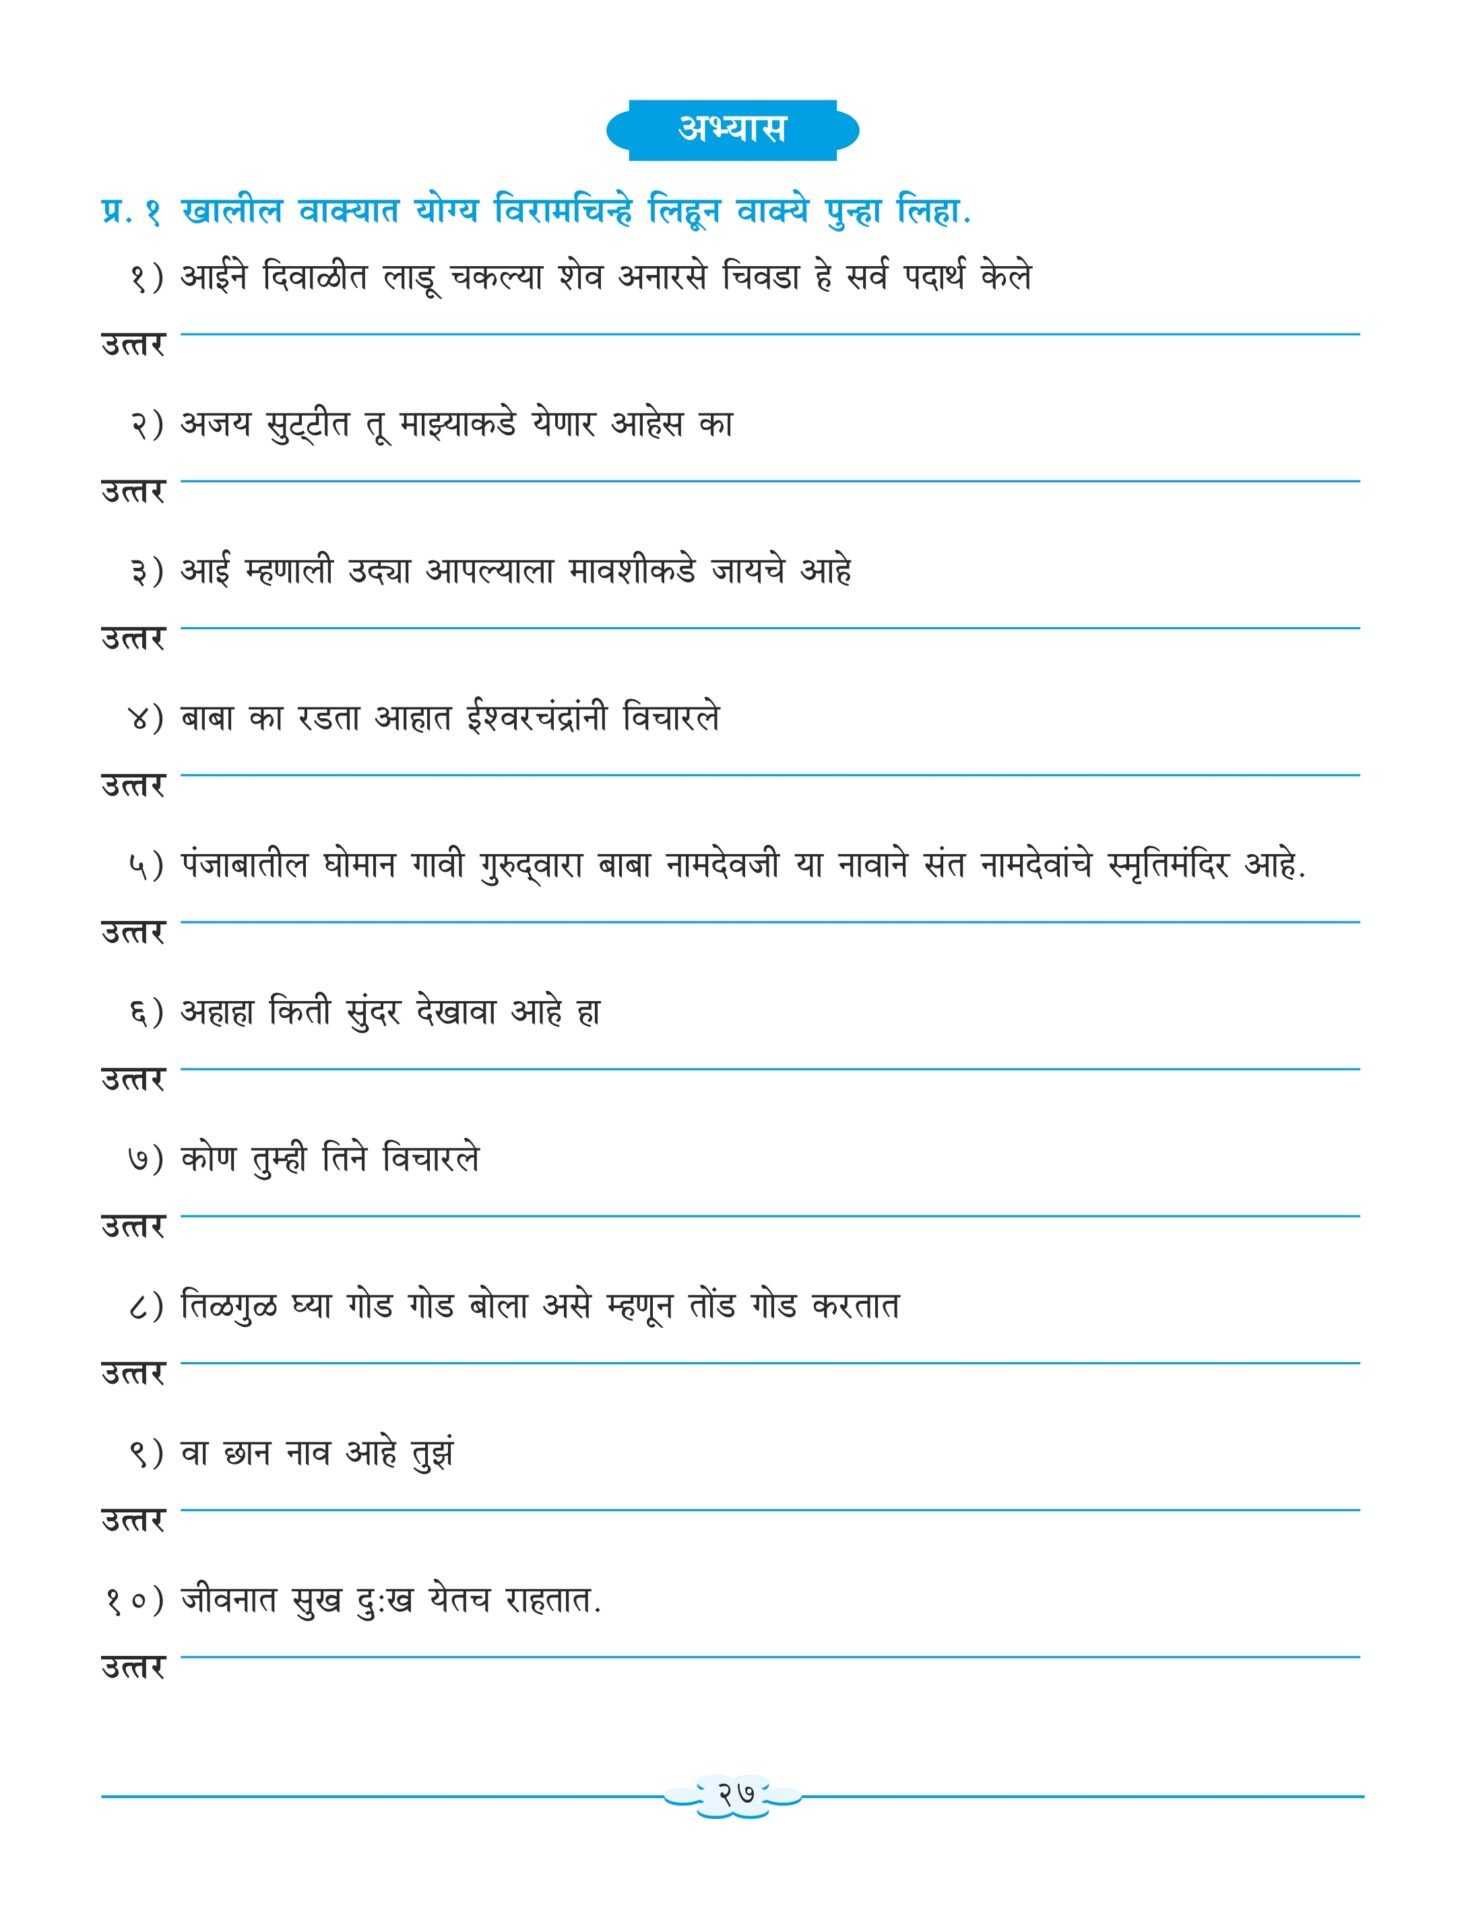 nigam-marathi-sulabhbharati-l-l-grammar-and-writing-skills-standard